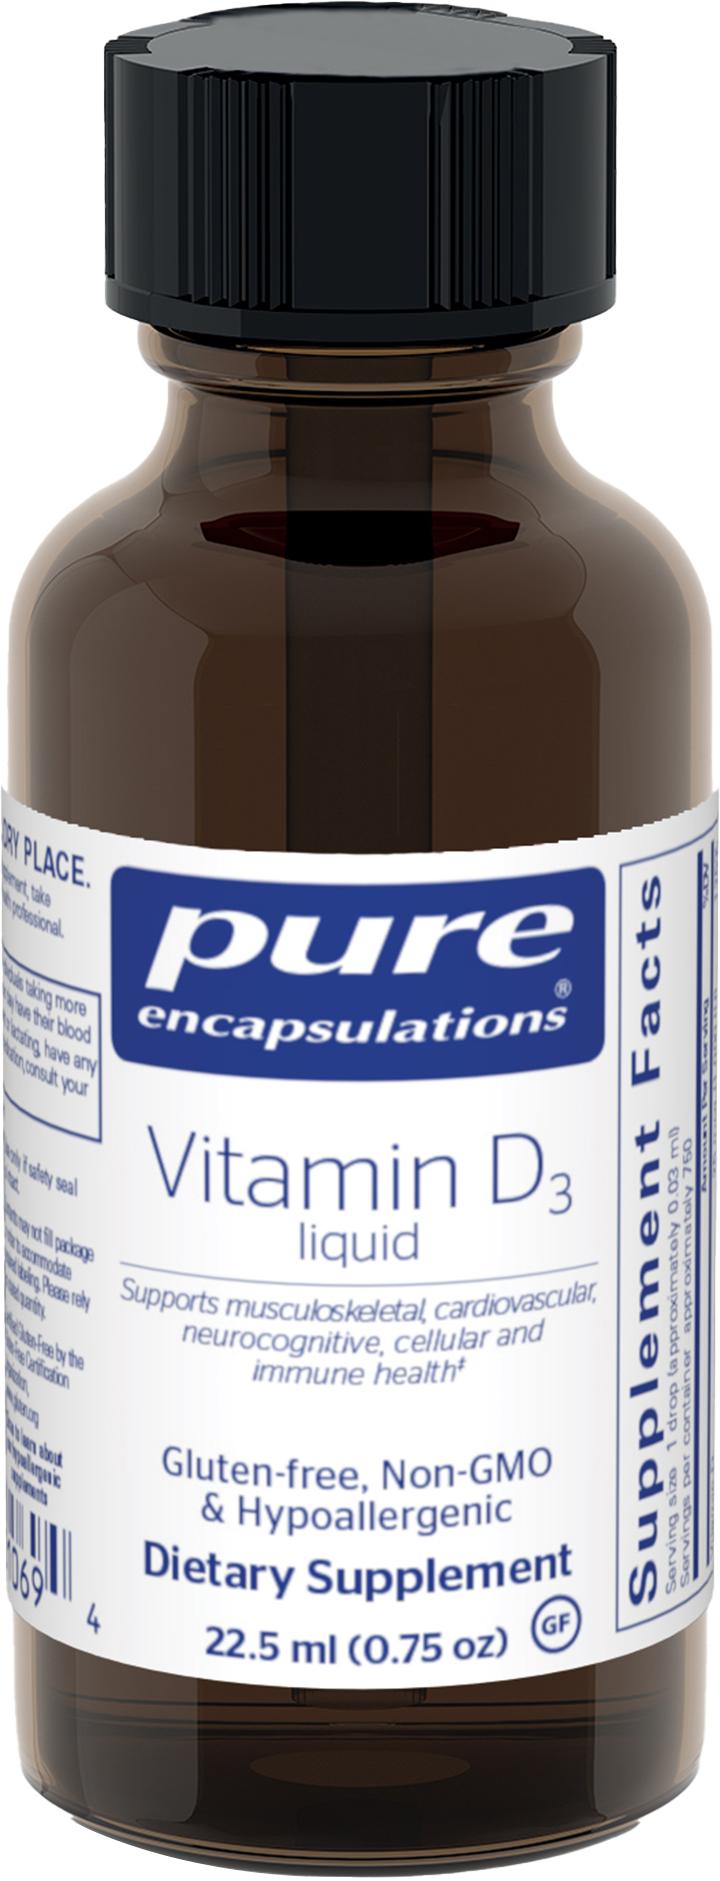 Vitamin D<sub>3</sub> liquid — 22.5 mL